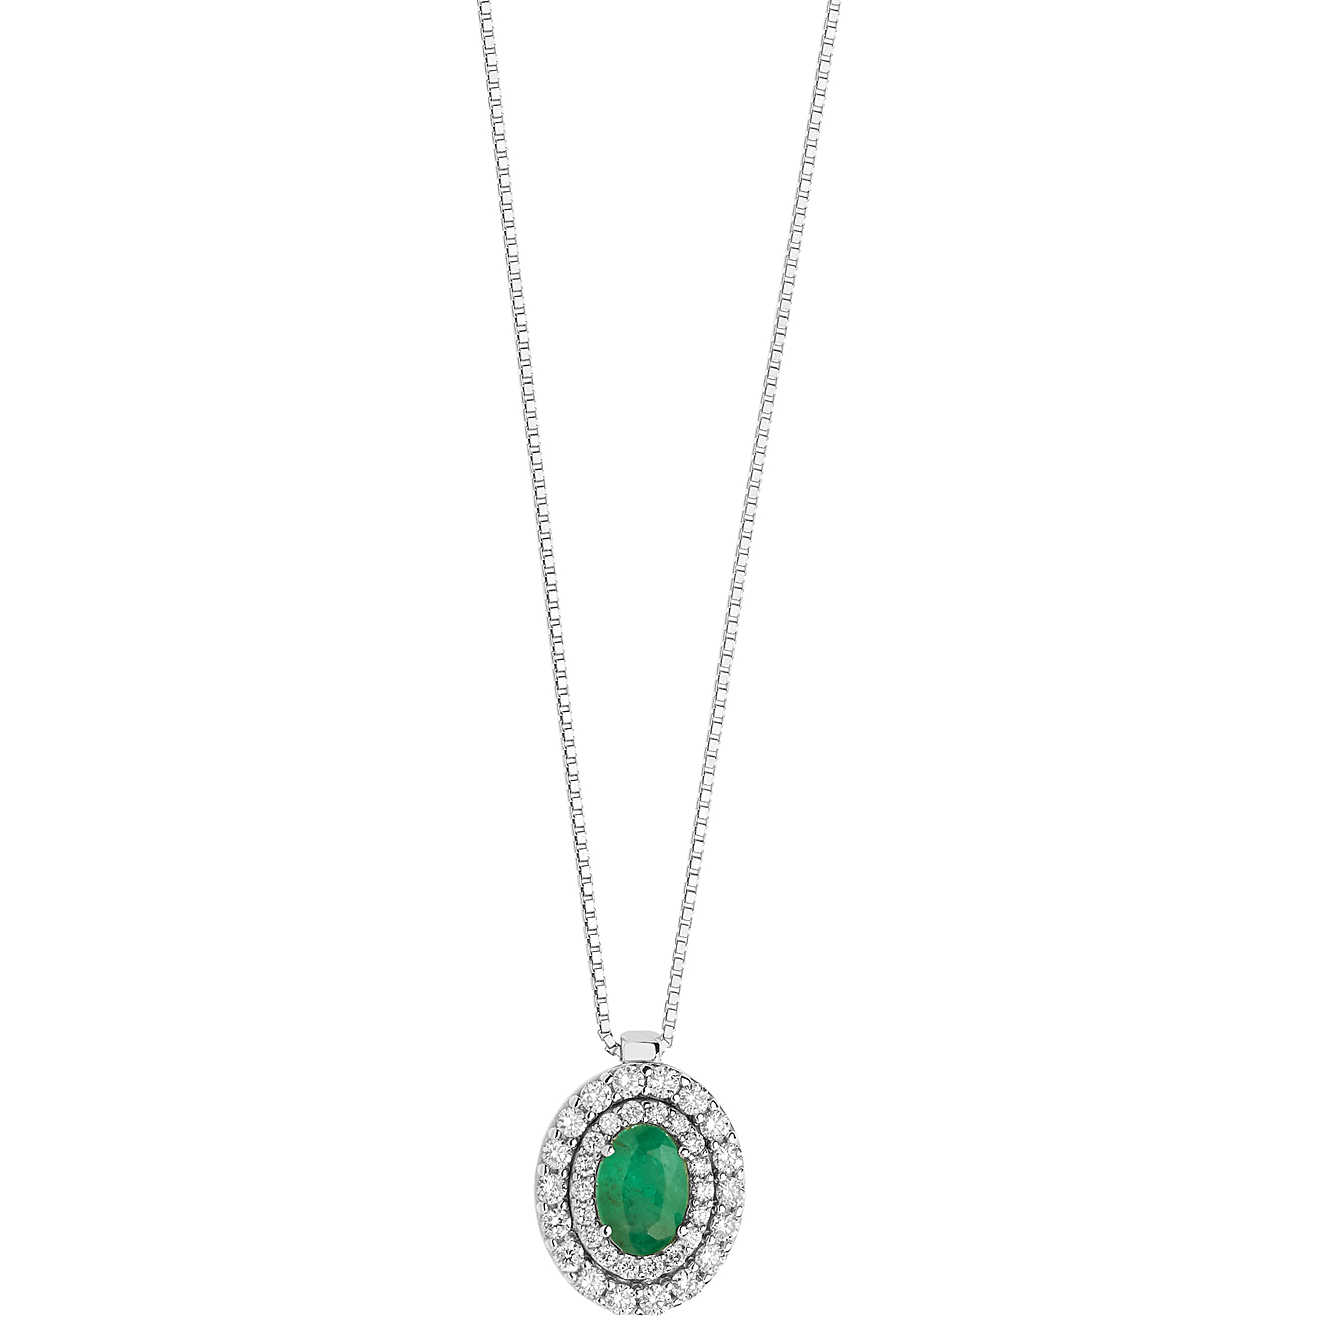 Orion GLB 1472 Women’s Jewelry Necklace